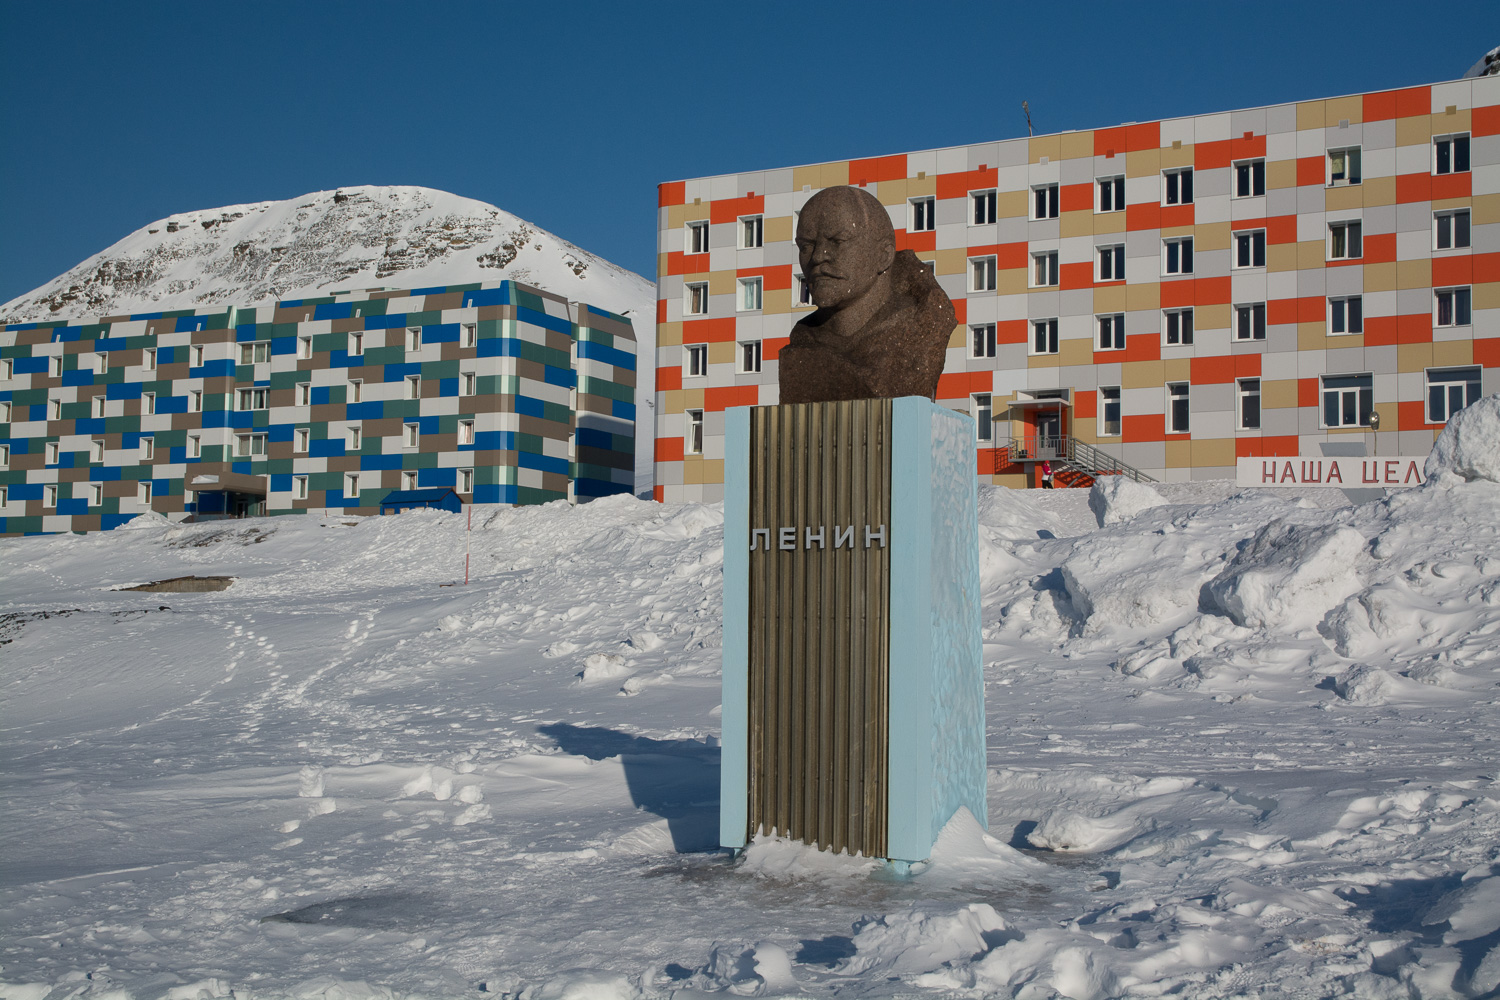 Barentsburg // Russian town on Spitsbergen